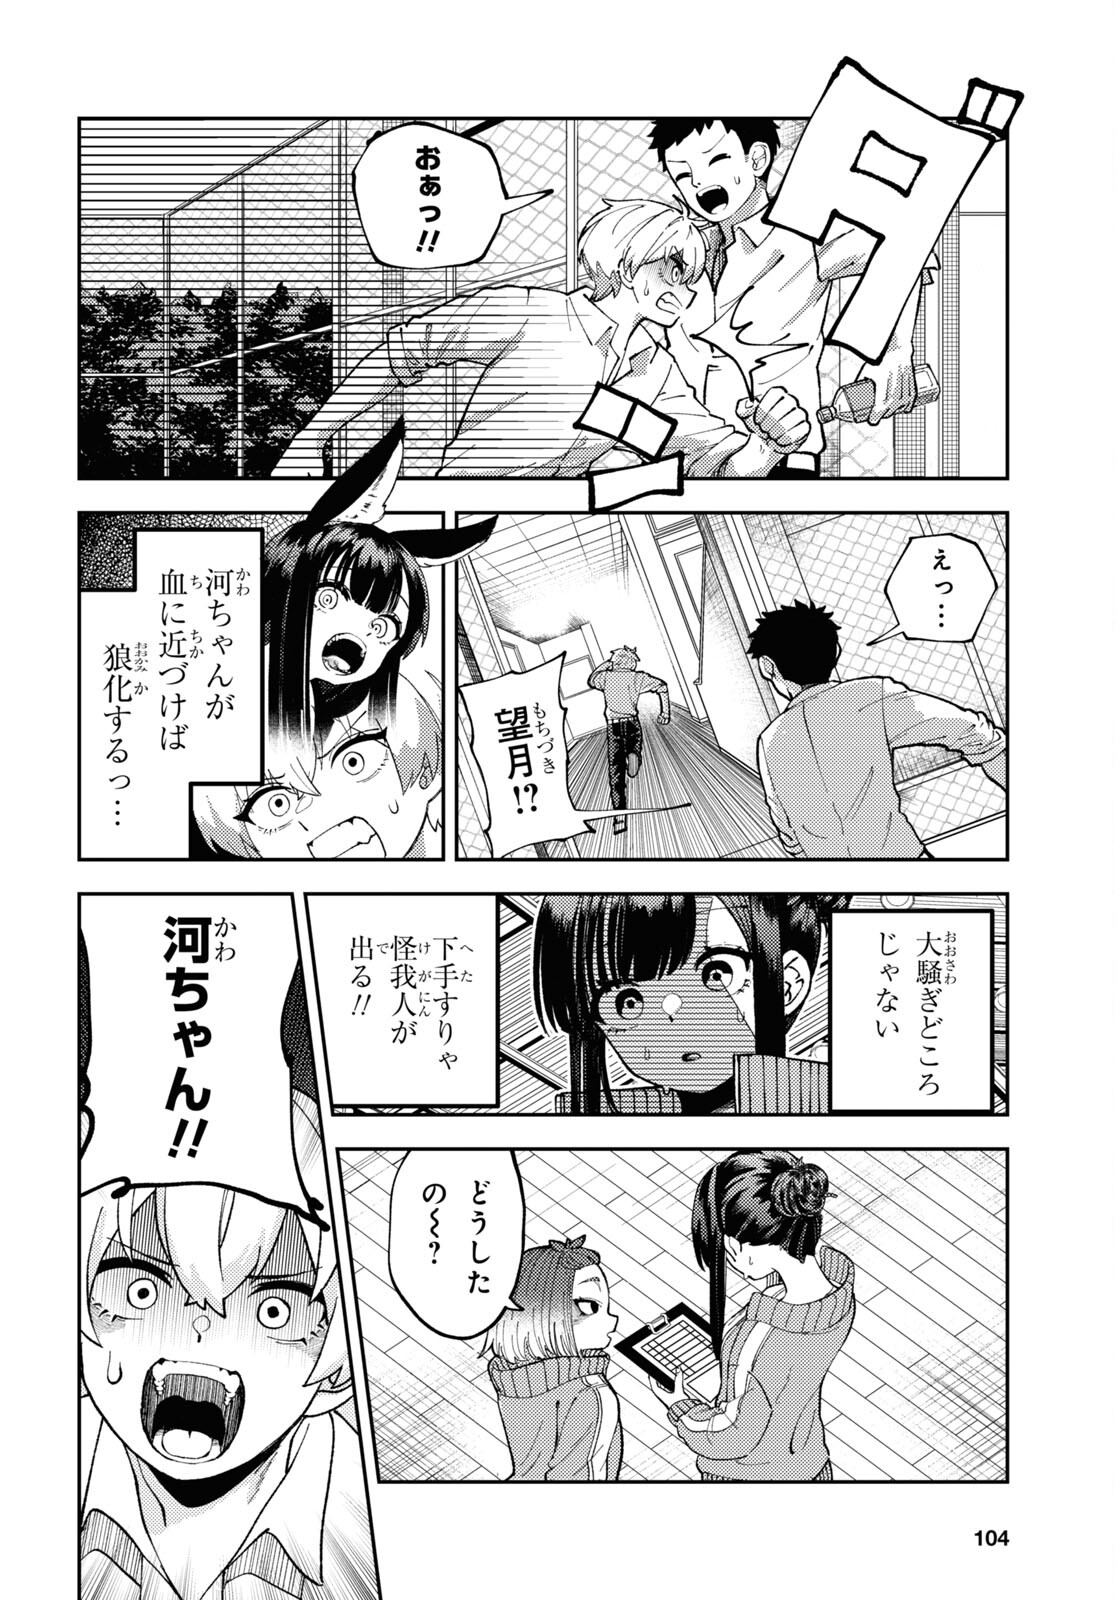 Garuru Girl - Chapter 3 - Page 18